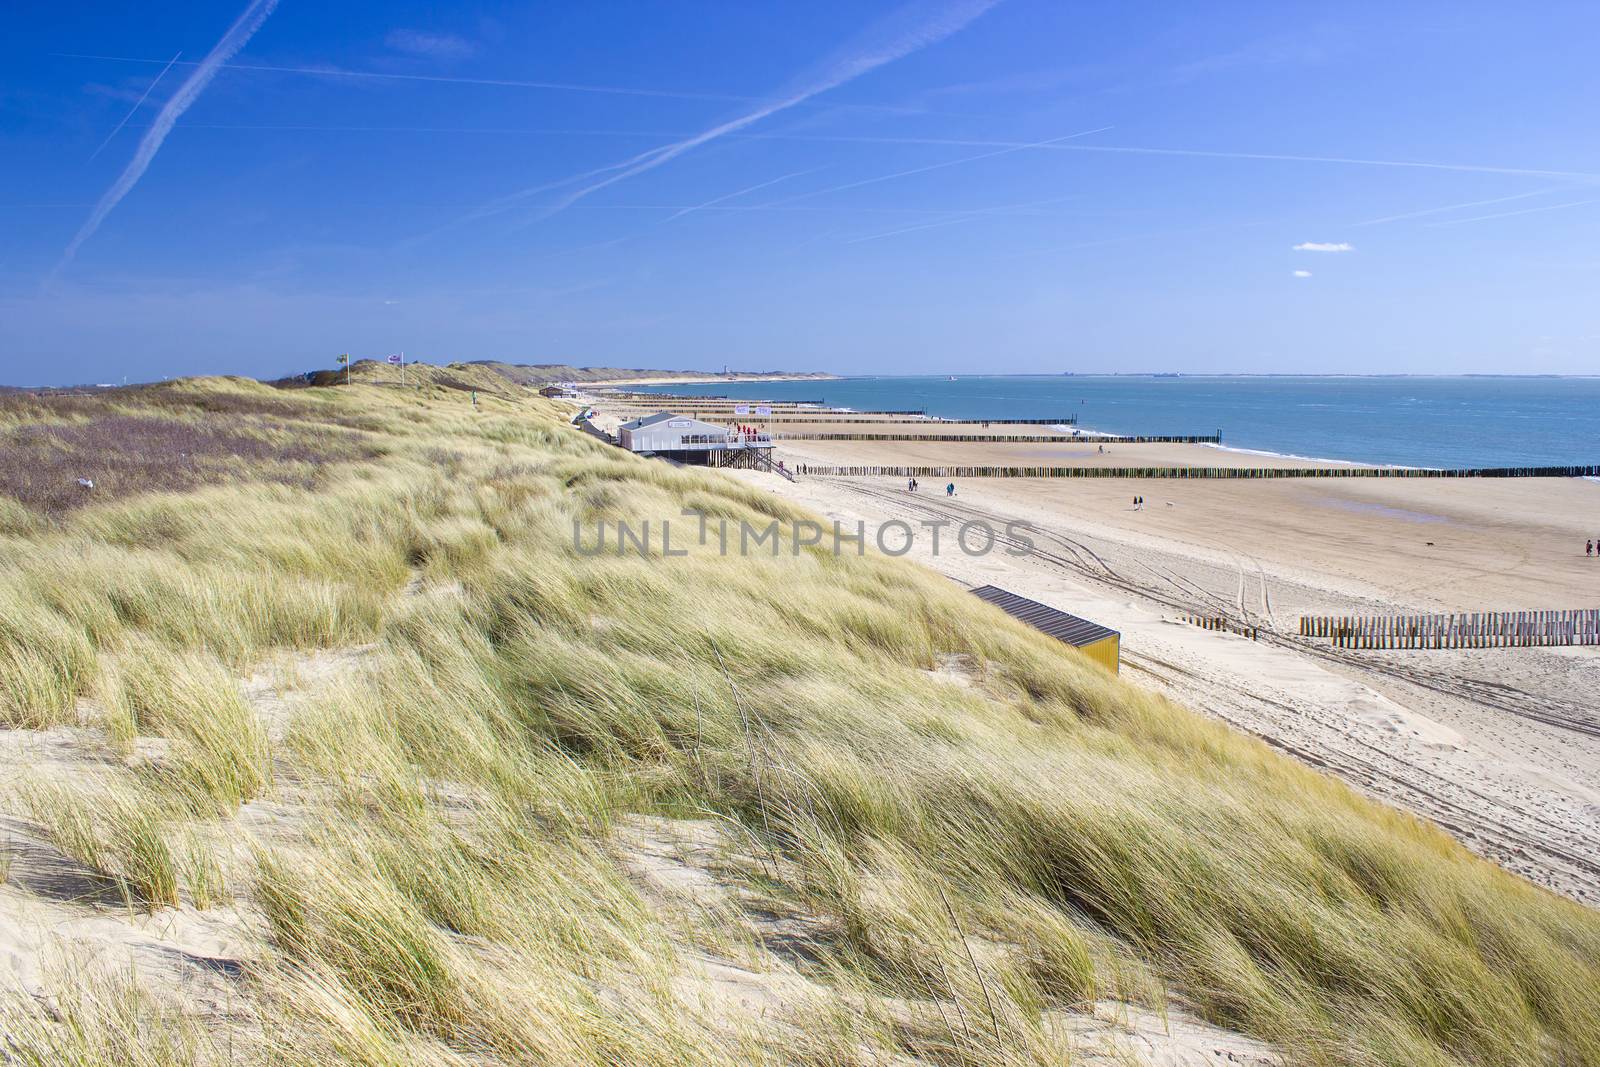 the dunes, Zoutelande, the Netherlands by miradrozdowski